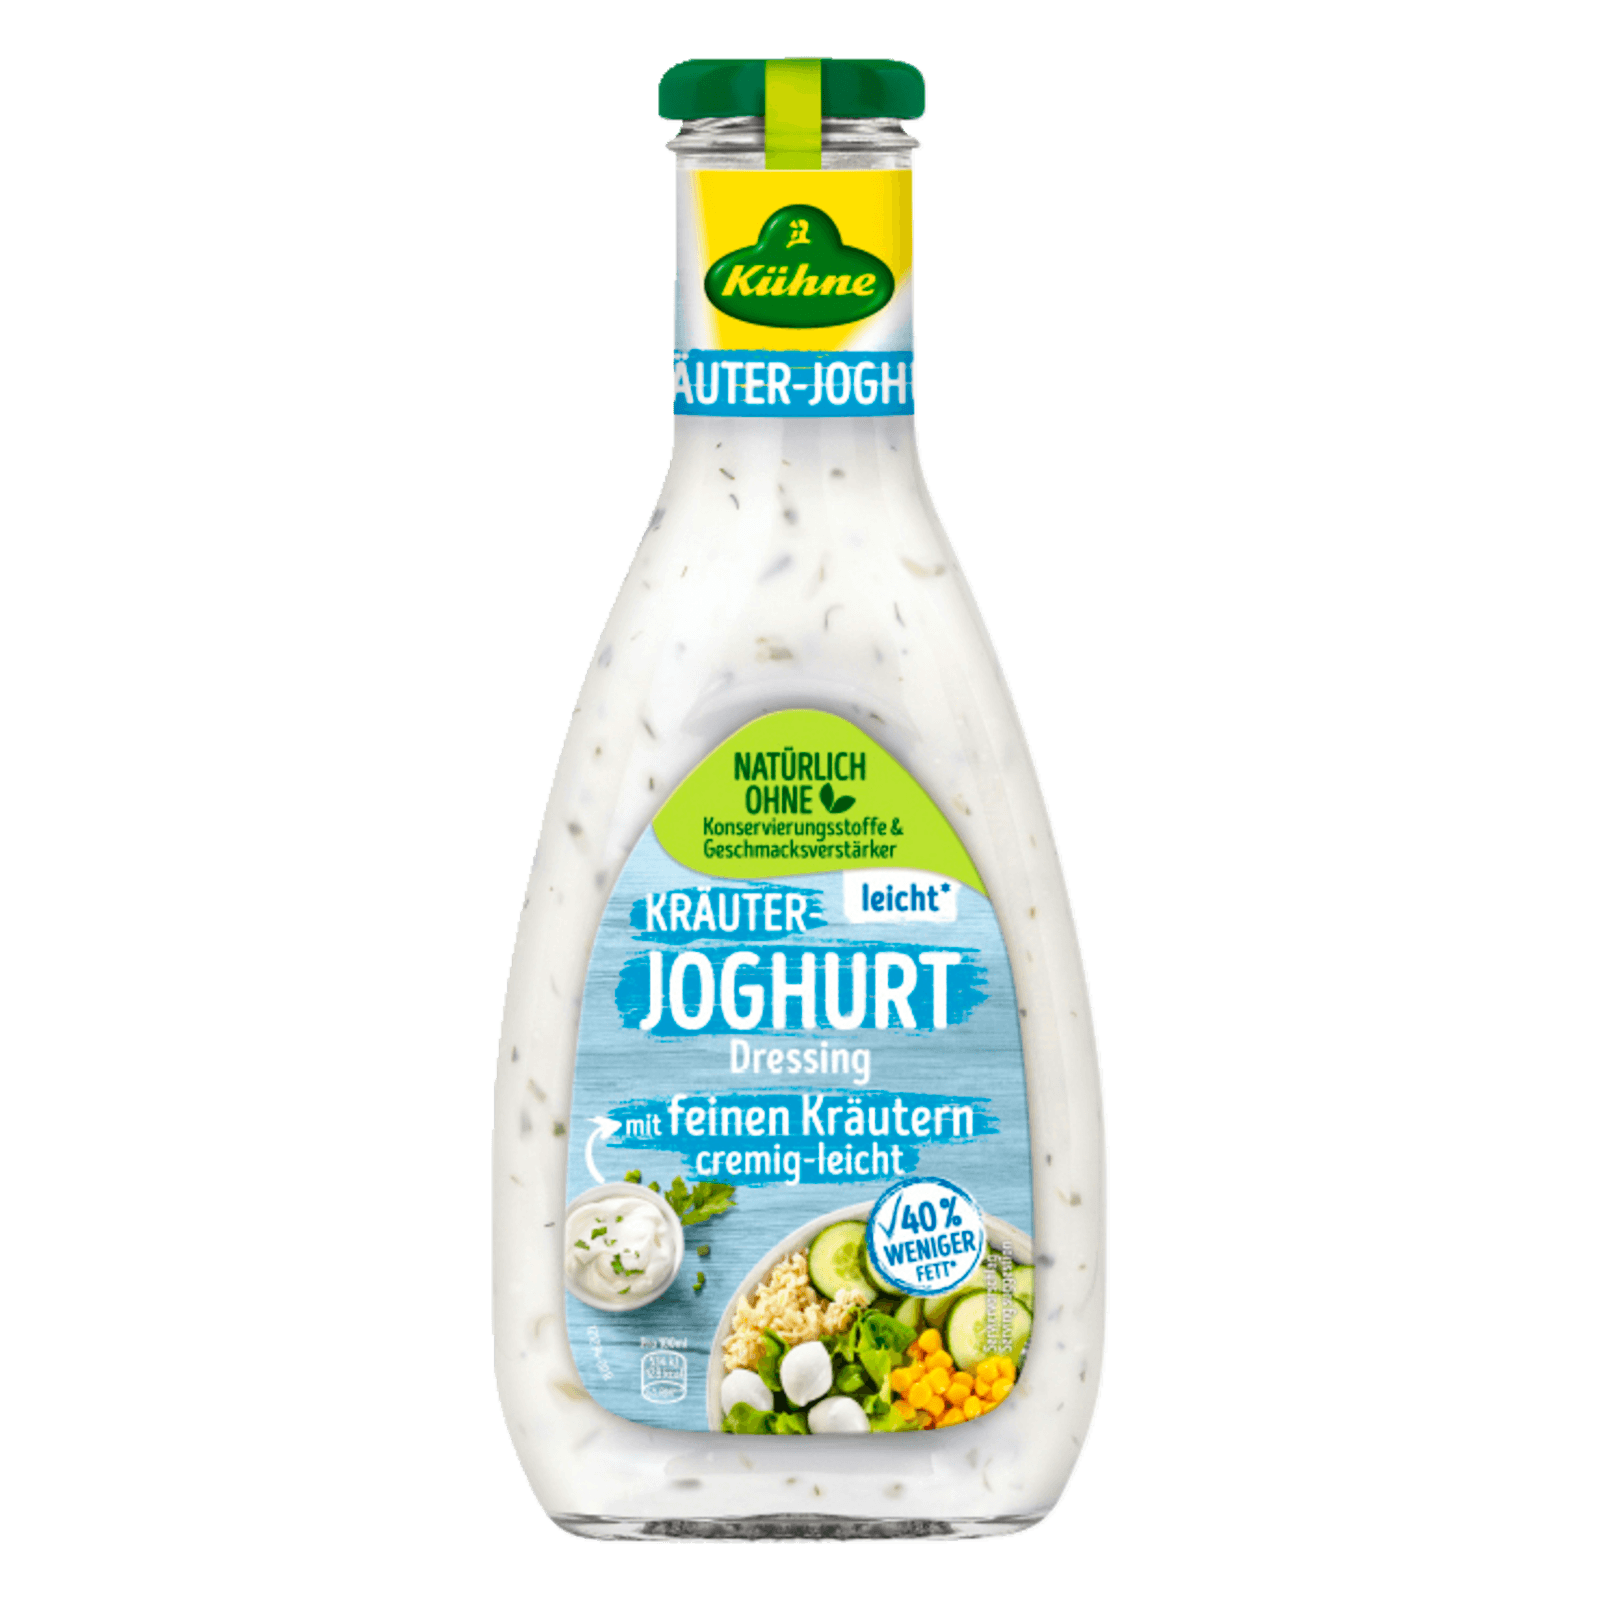 Kühne Joghurt-Kräuter-Dressing leicht 500ml bei REWE online bestellen!